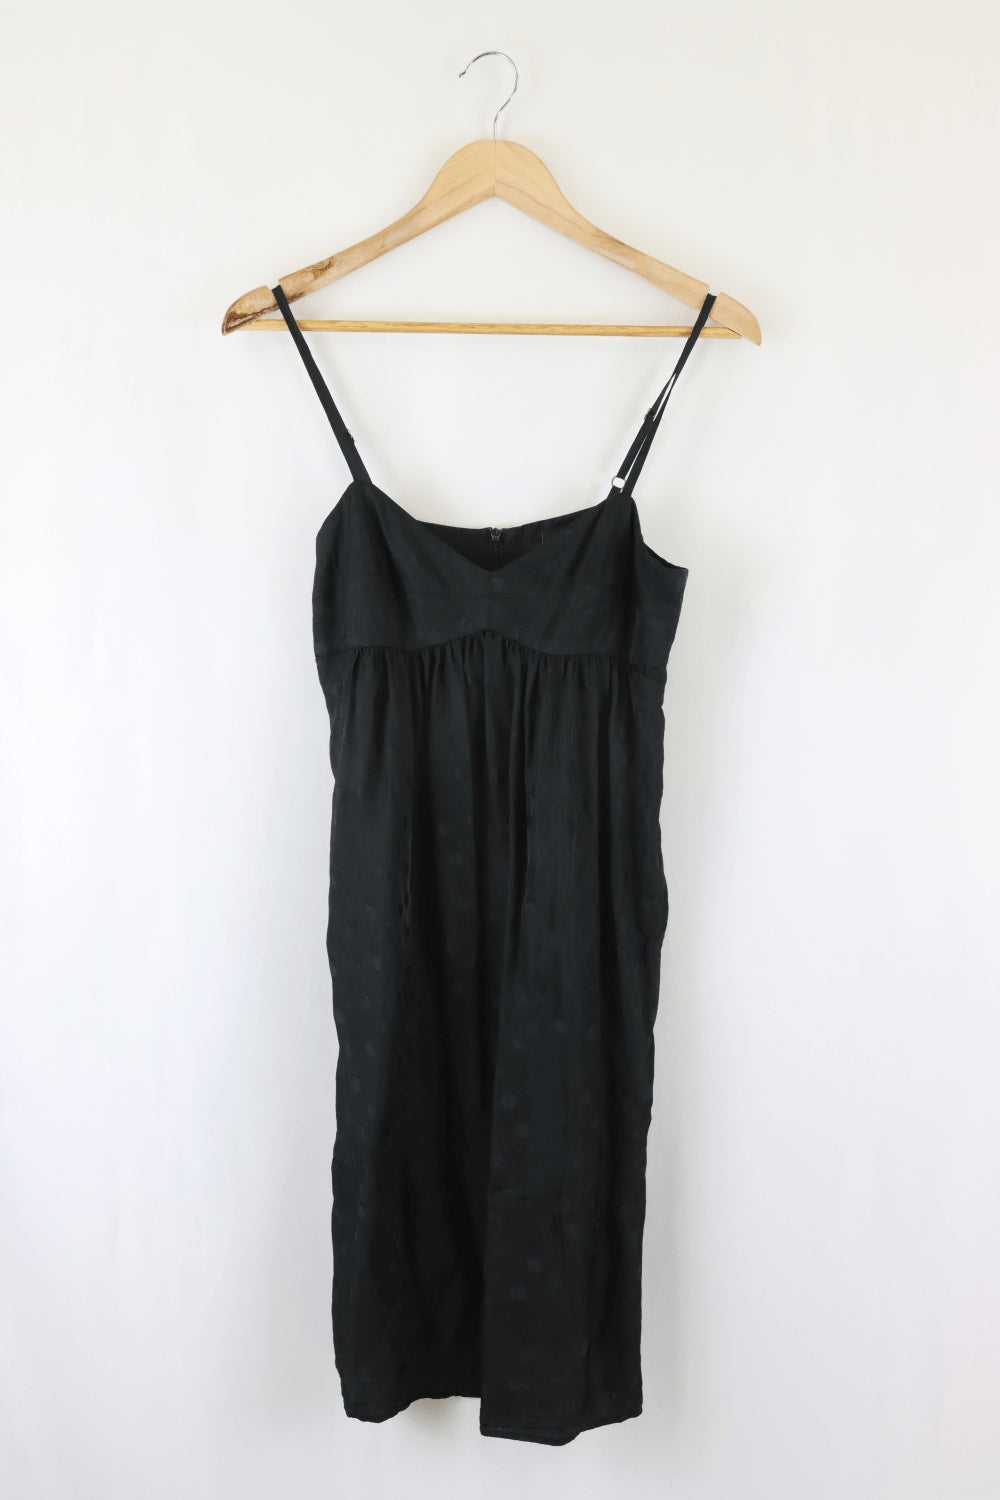 Zimmermann Black Dress 12